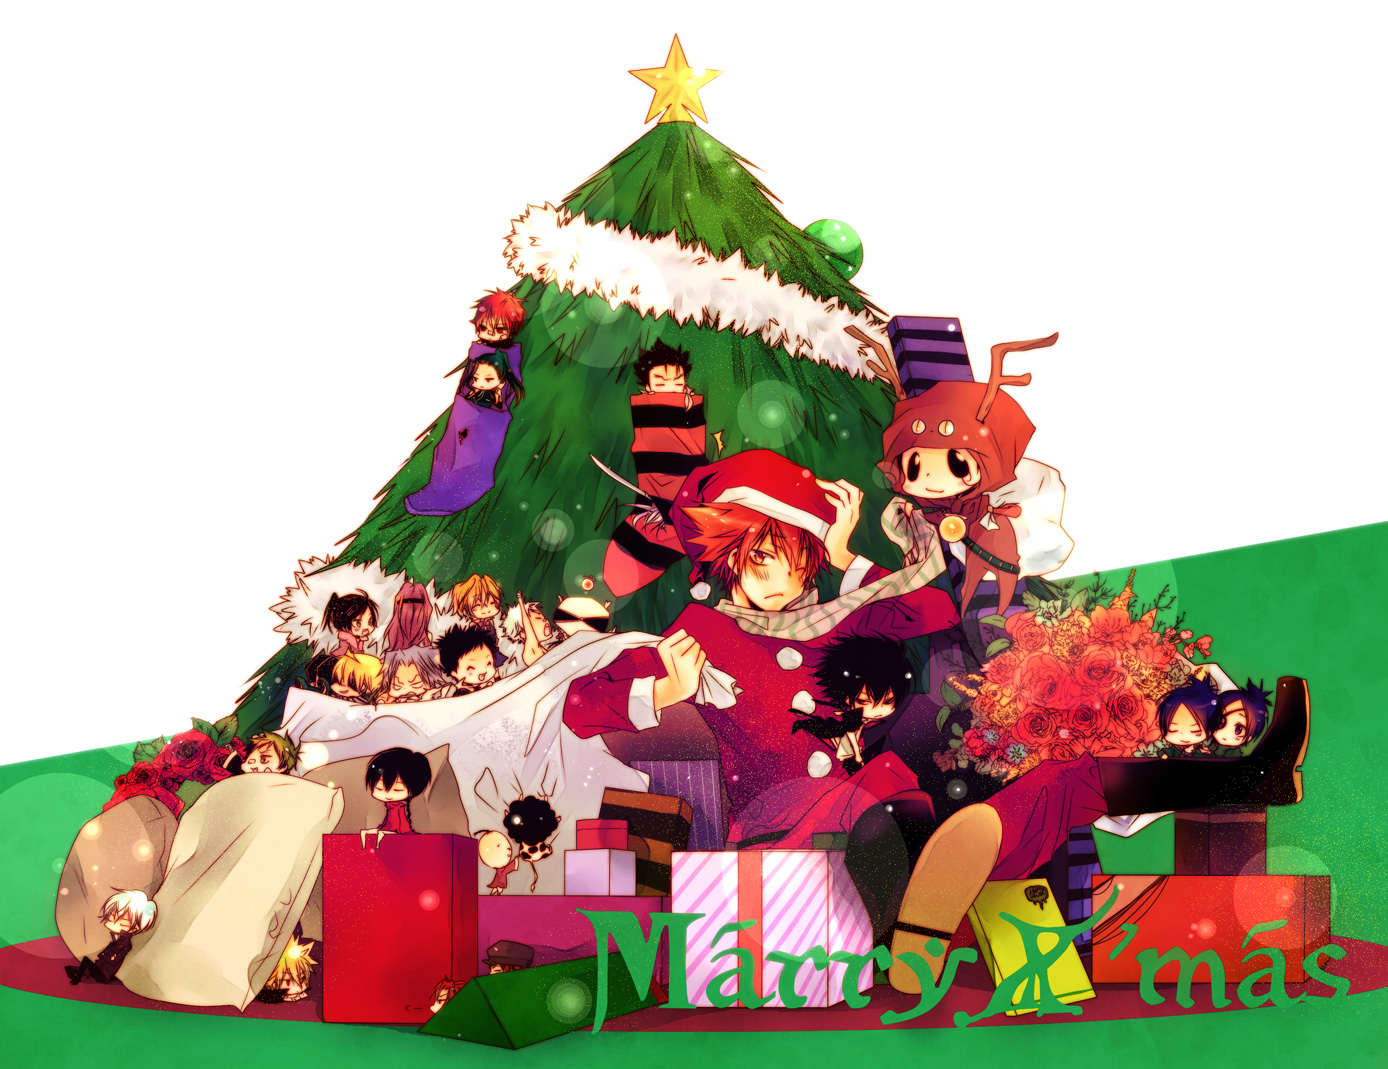 Colorful Christmas themed Chibi characters from Katekyō Hitman Reborn! anime series.